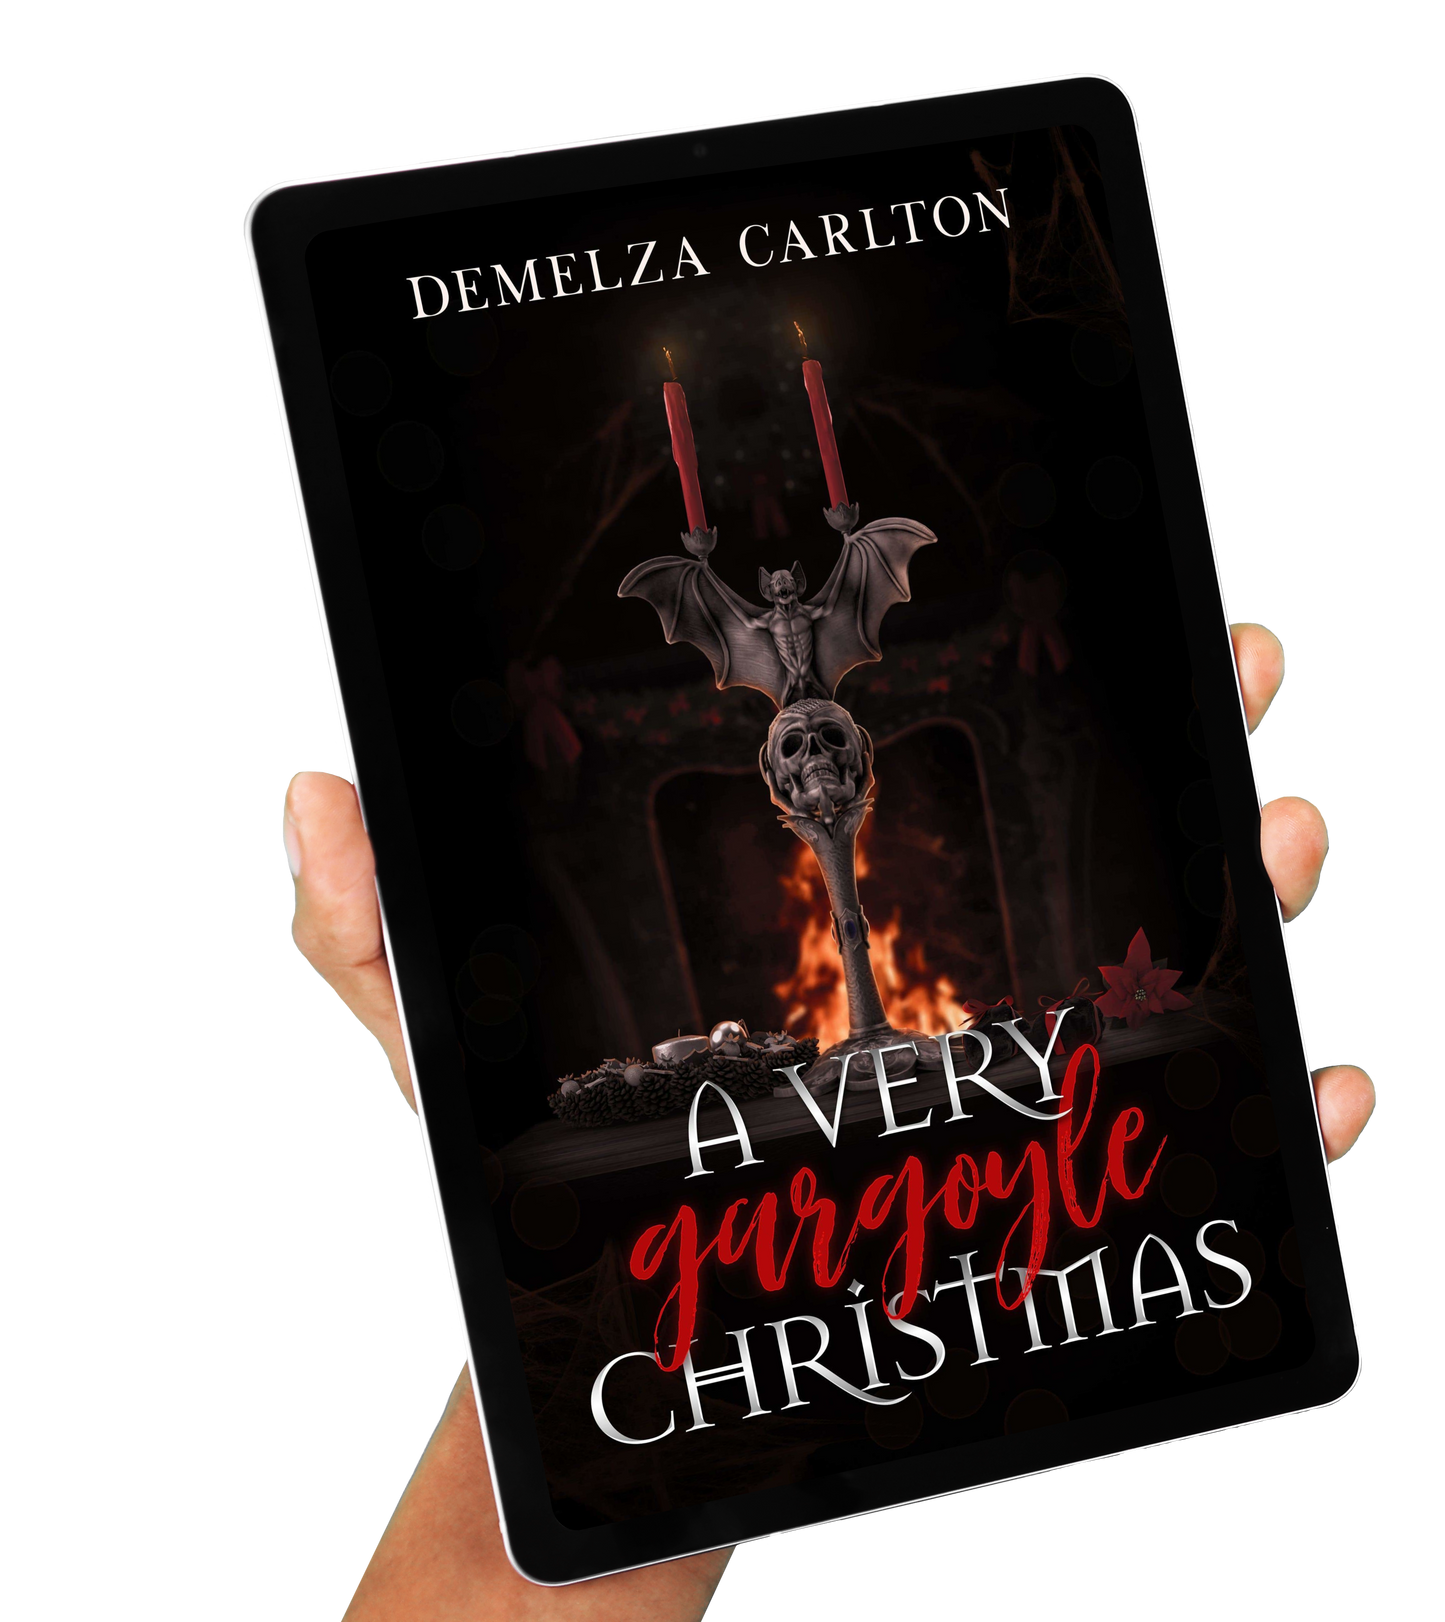 A Very Gargoyle Christmas paranormal protector gargoyle monster romance ebook 3